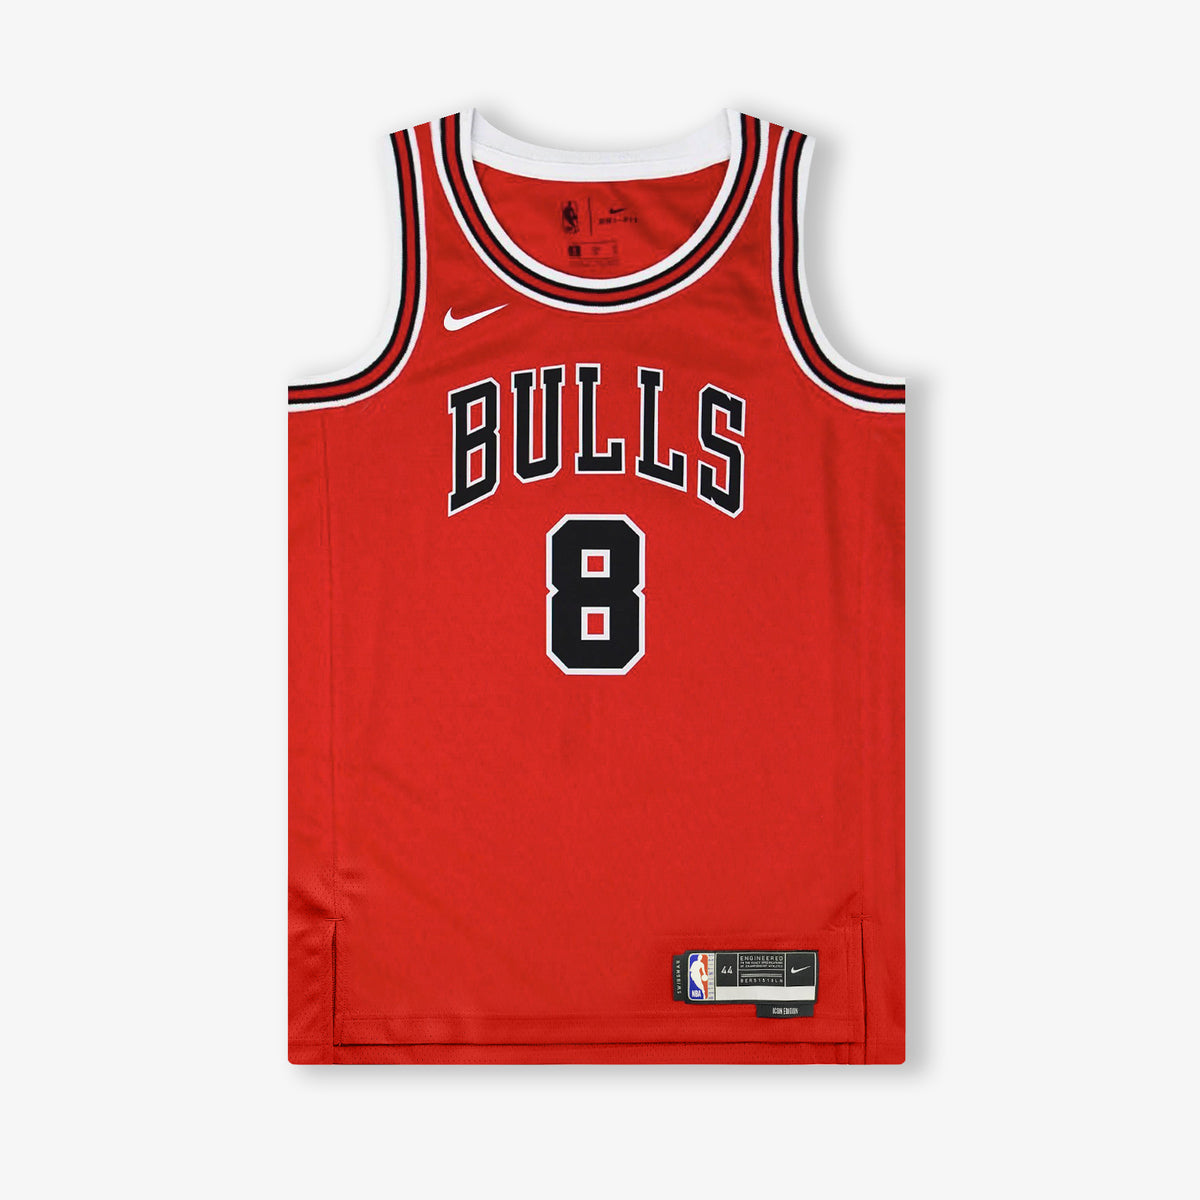 Zach LaVine Jersey - NBA Chicago Bulls Zach LaVine Jerseys - Bulls